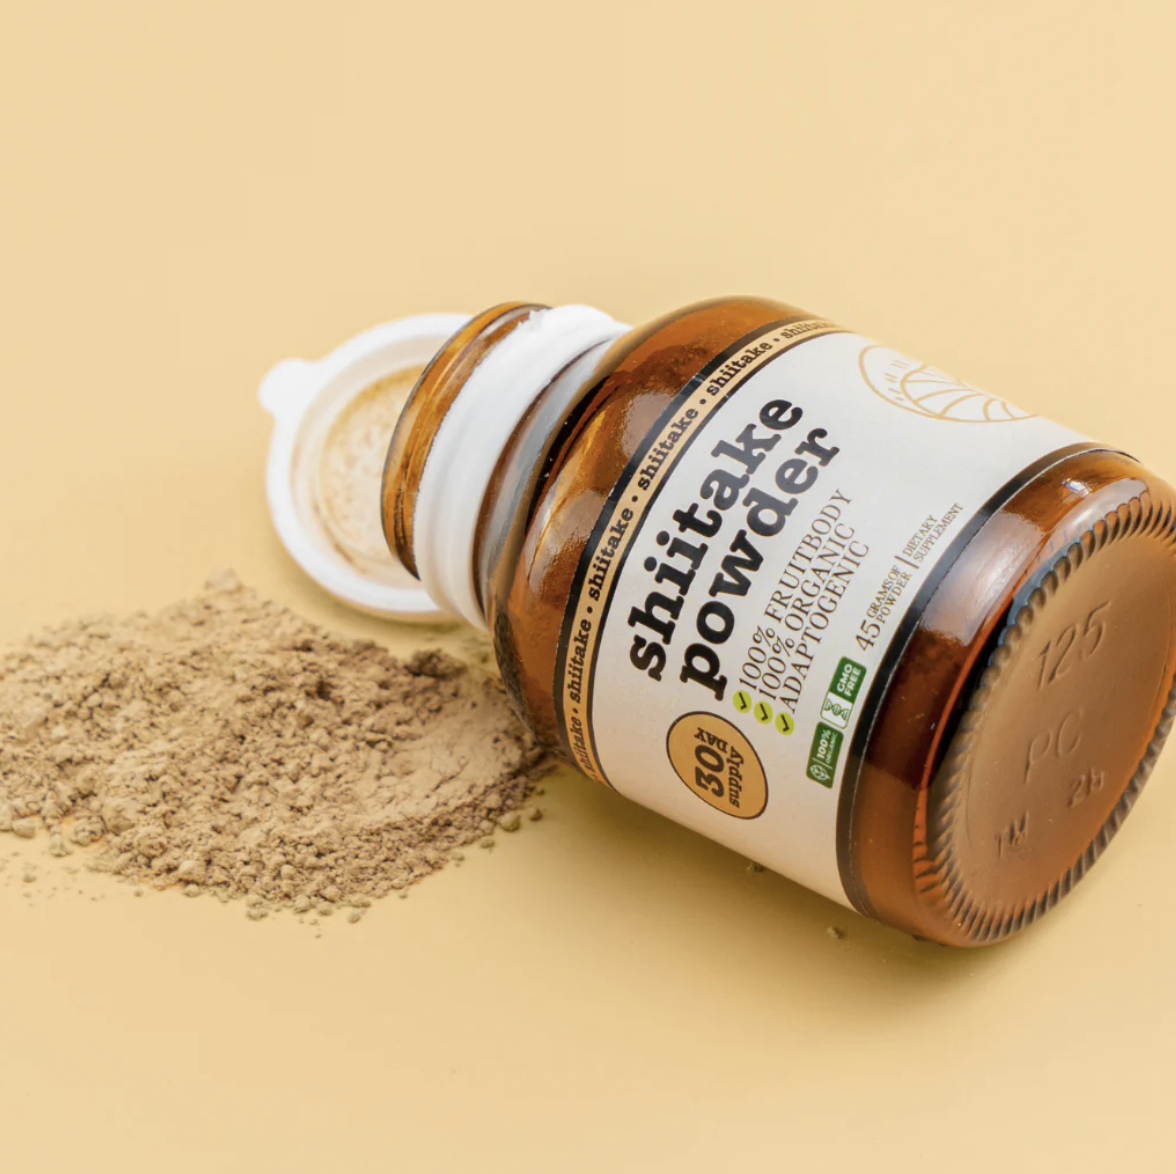 Organic Shiitake Powder